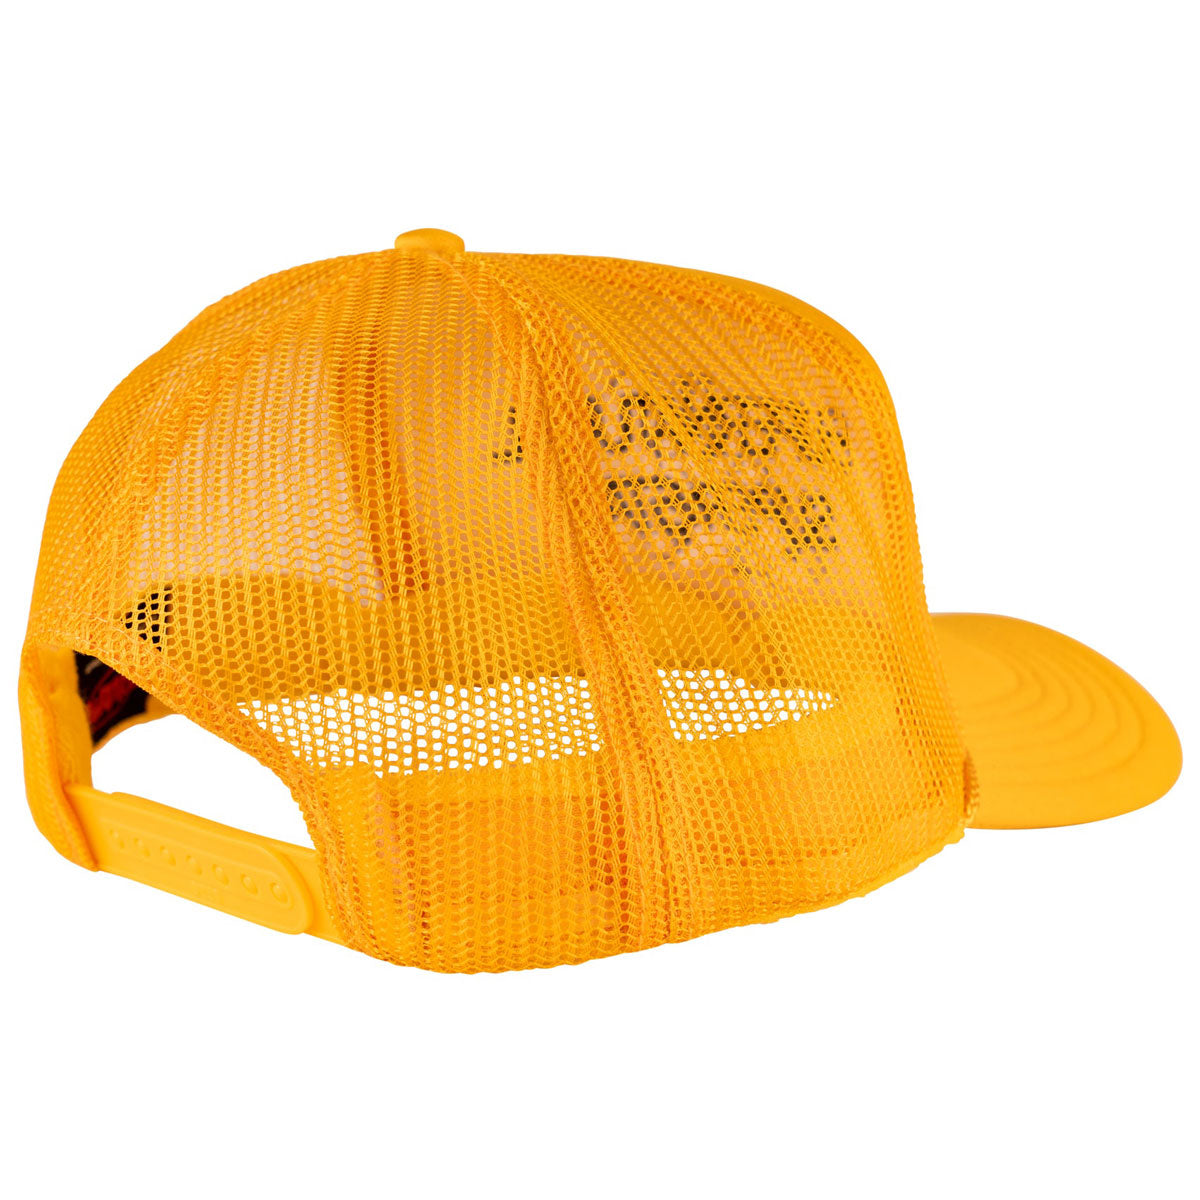 Welcome Superstar Trucker Hat - Yellow image 2